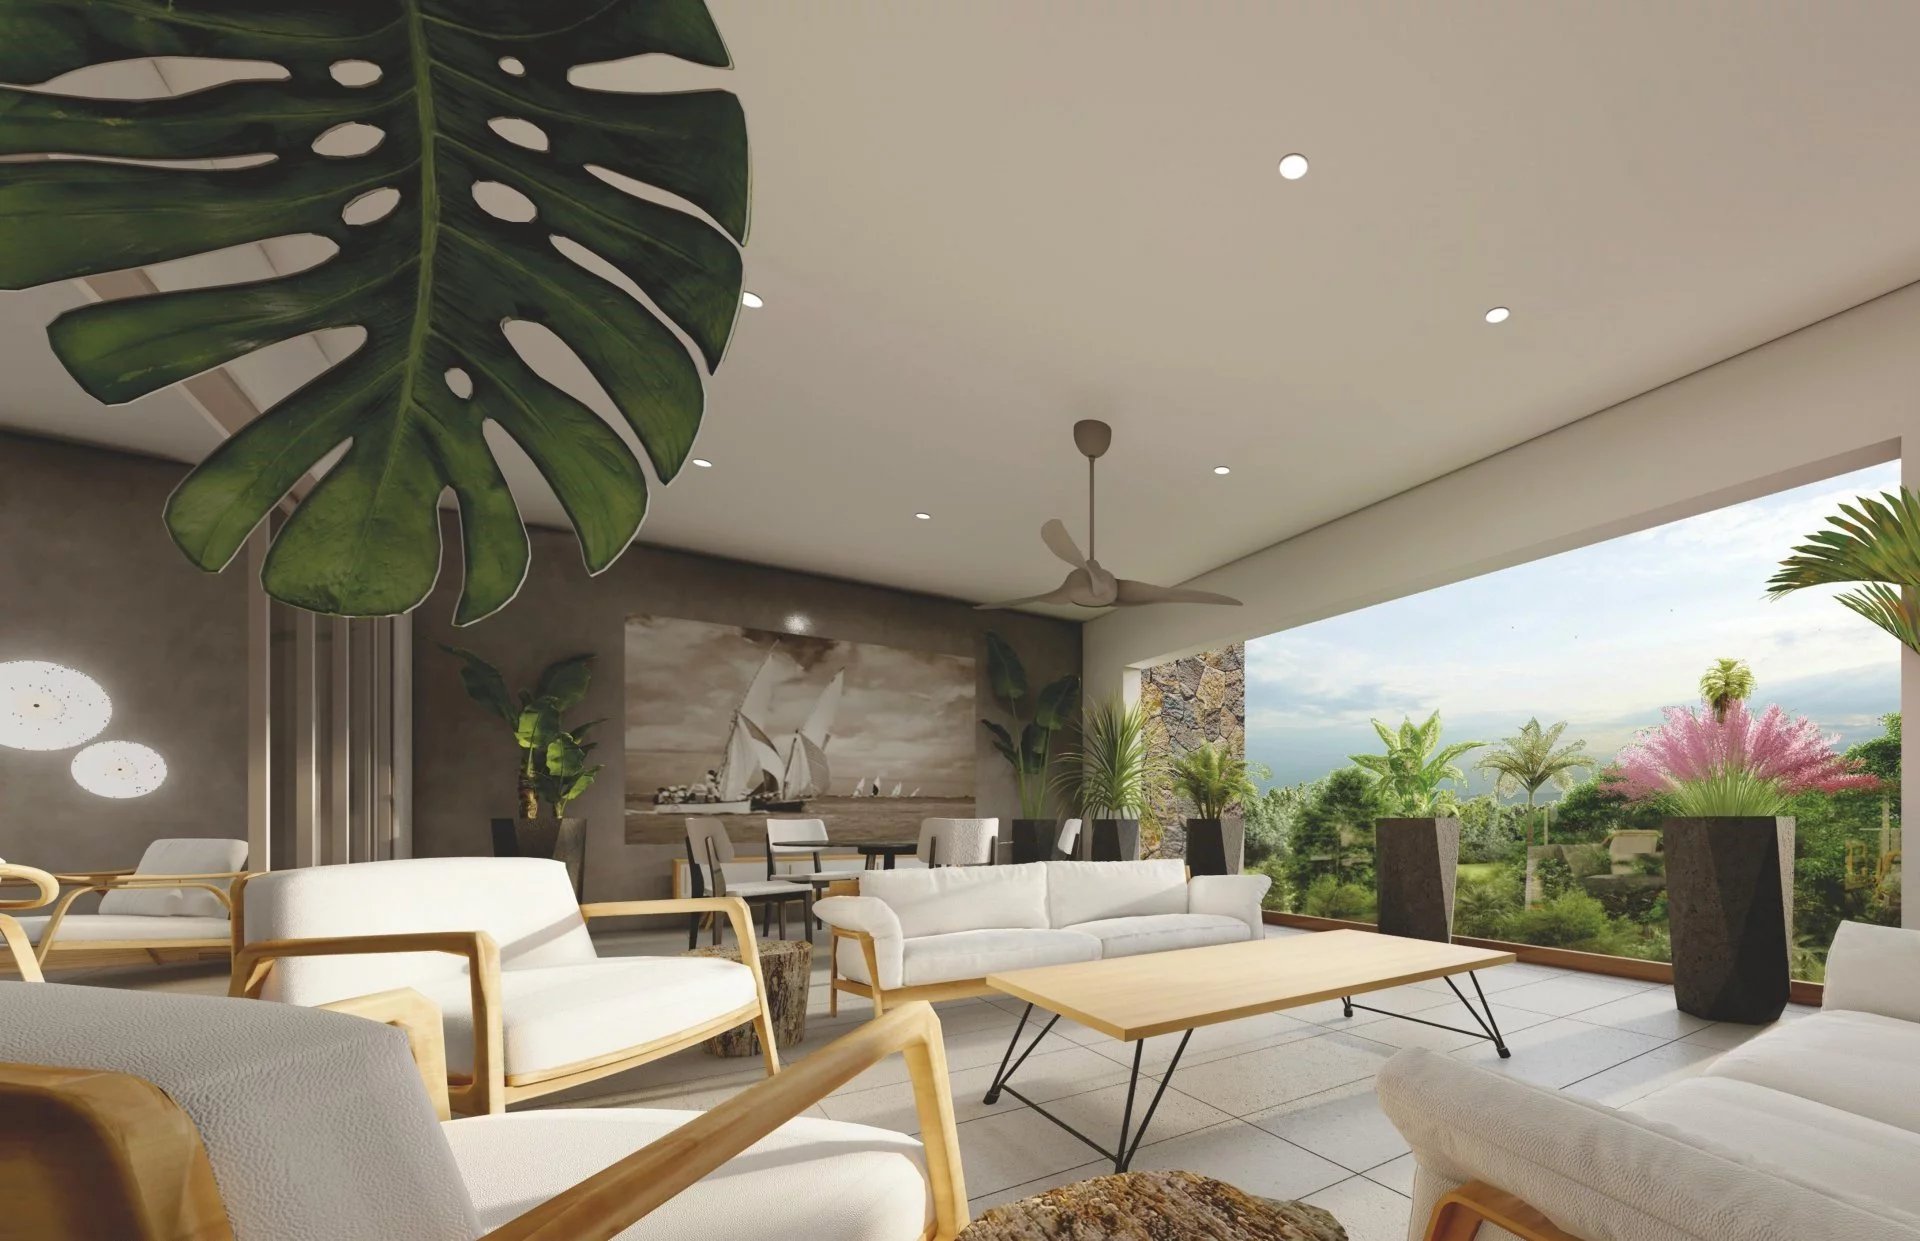 MOKA / BAGATELLE - New luxurious apartments development - 4 bedrooms